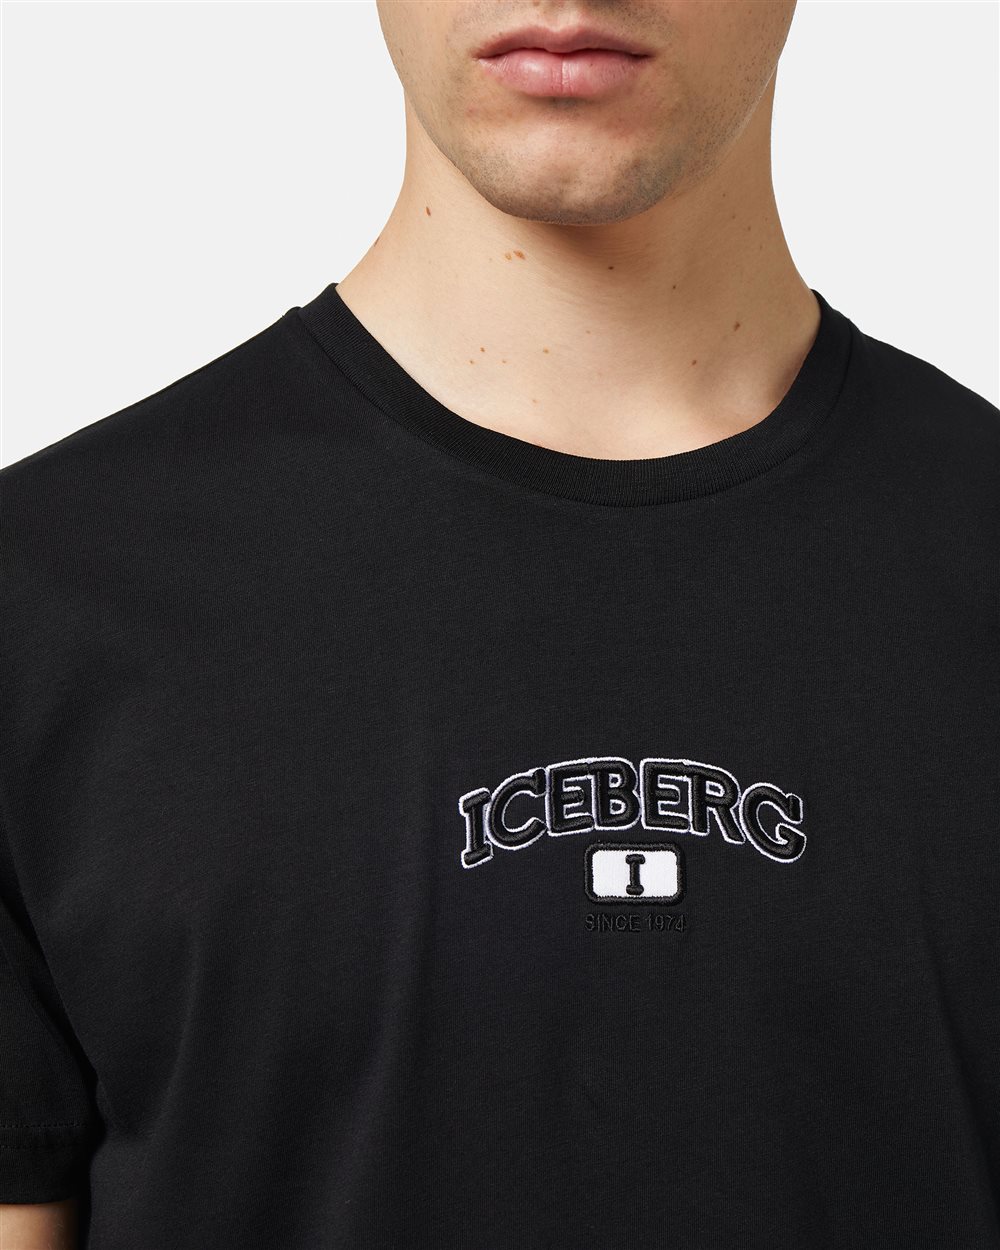 Black T-shirt with logo - Iceberg - Official Website